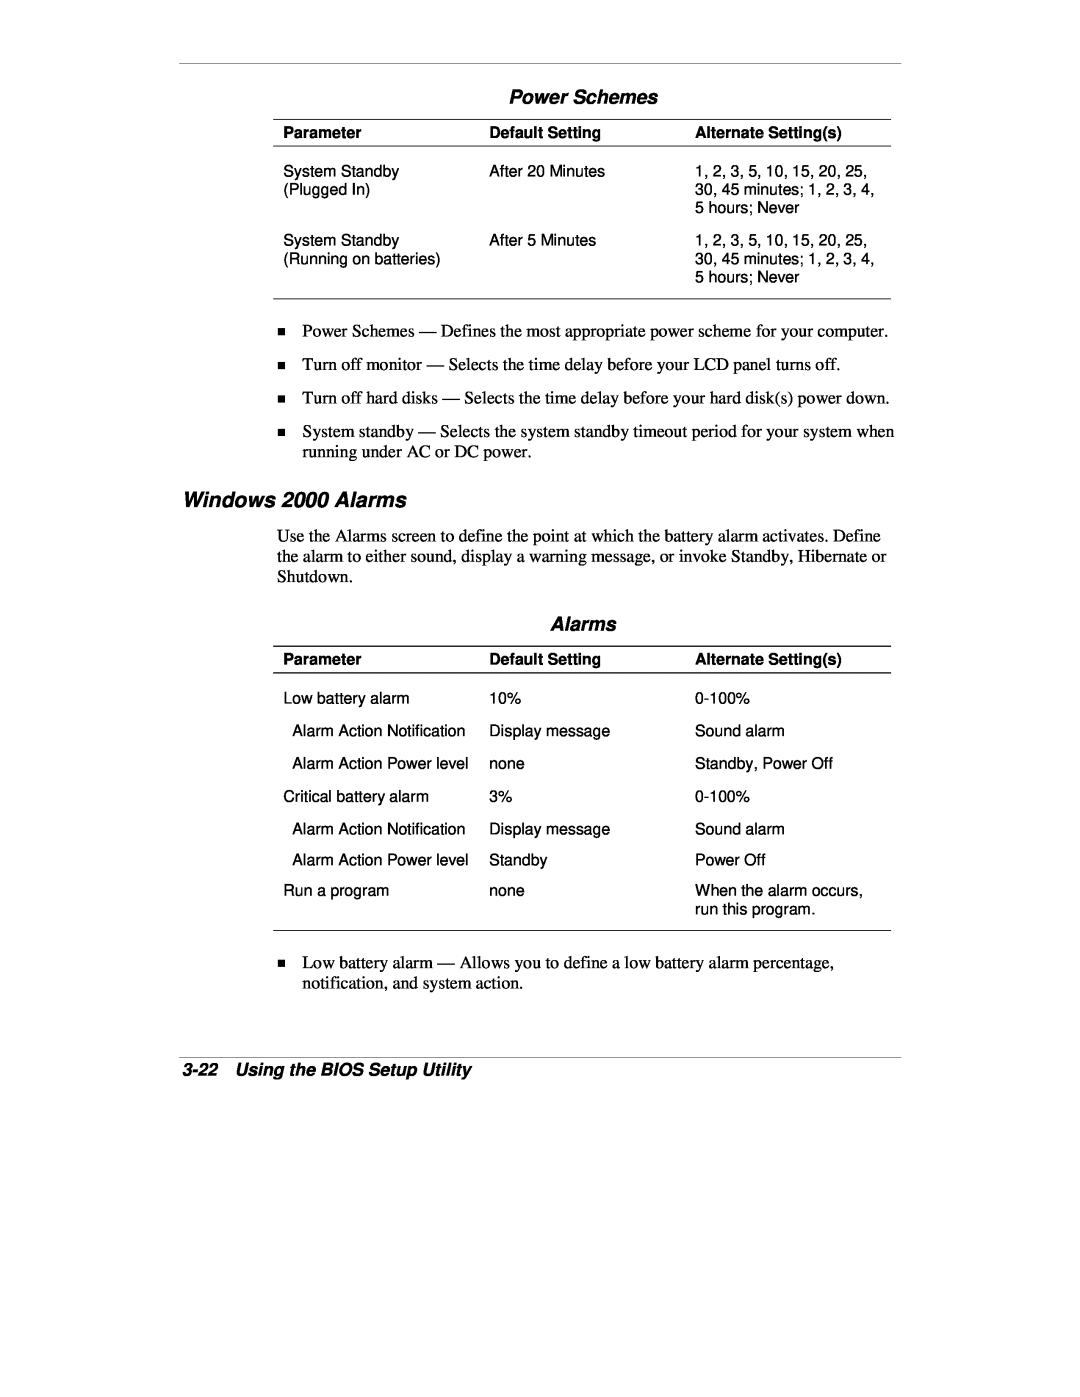 NEC VXi manual Windows 2000 Alarms, Power Schemes, 3-22Using the BIOS Setup Utility 